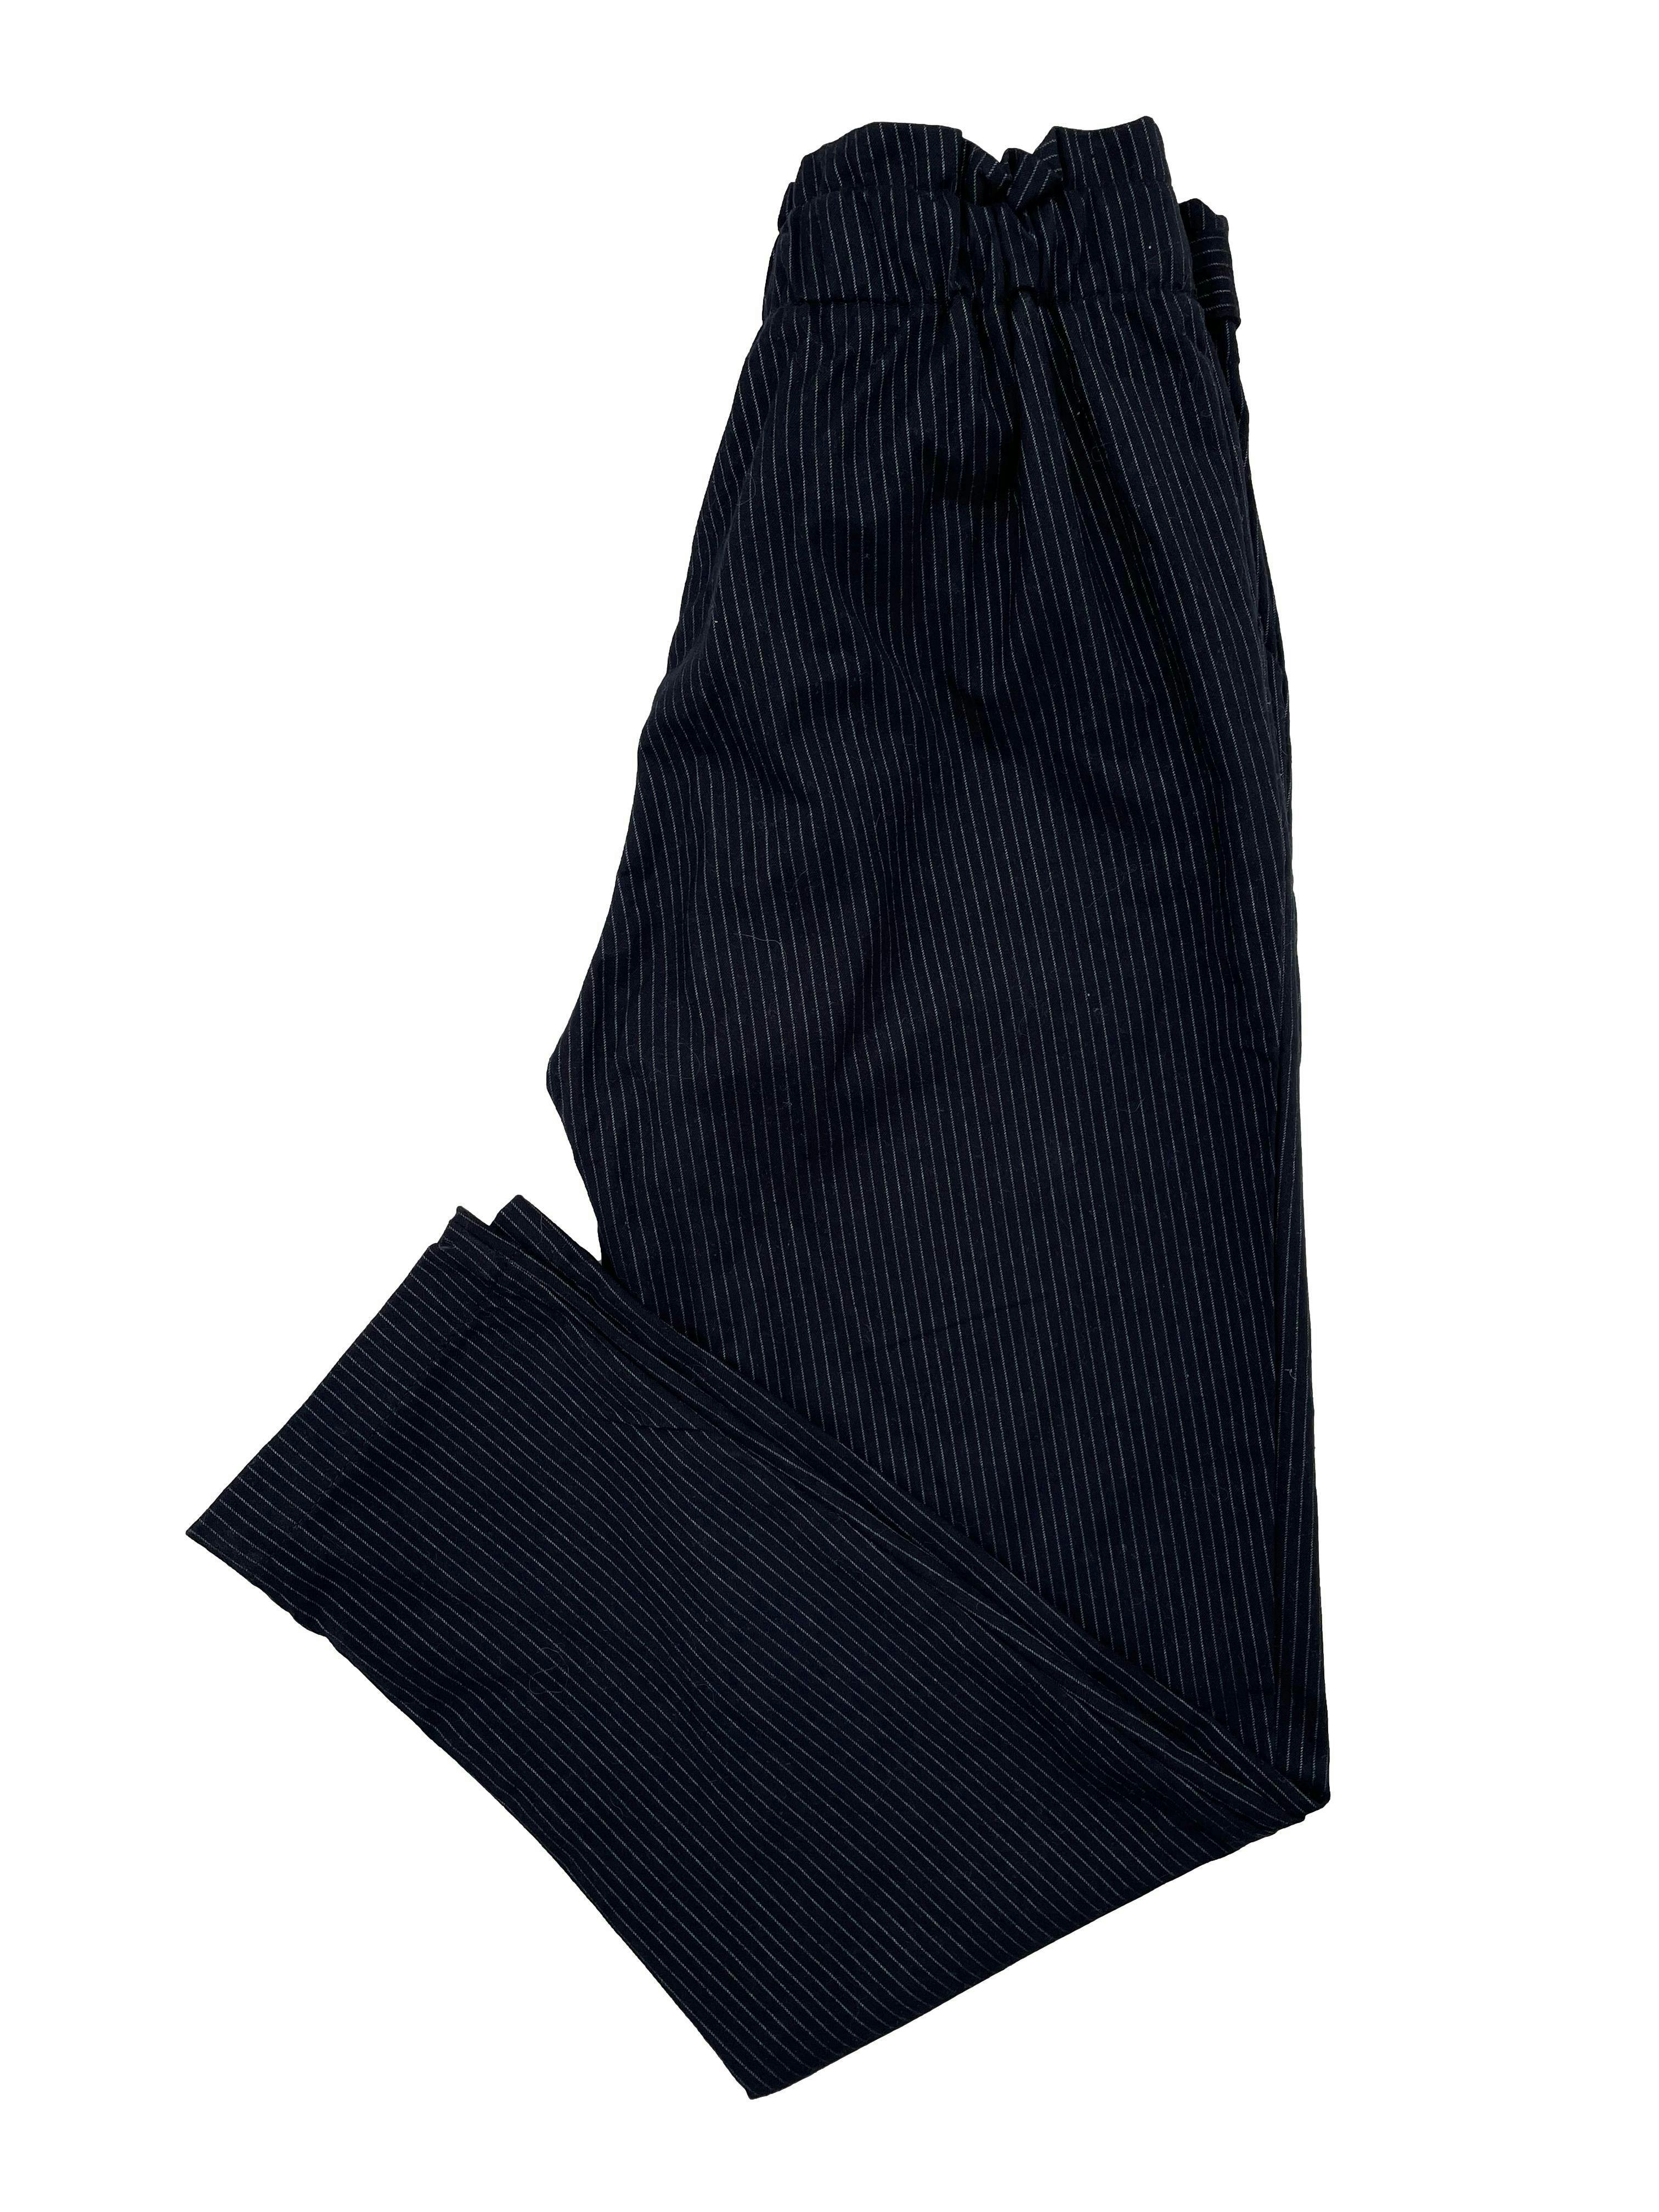 Pantalón Mango azul noche con líneas blancas, pretina elástica atrás y cinto para amarrar, bolsillos. Cintura 72cm Largo 98cm